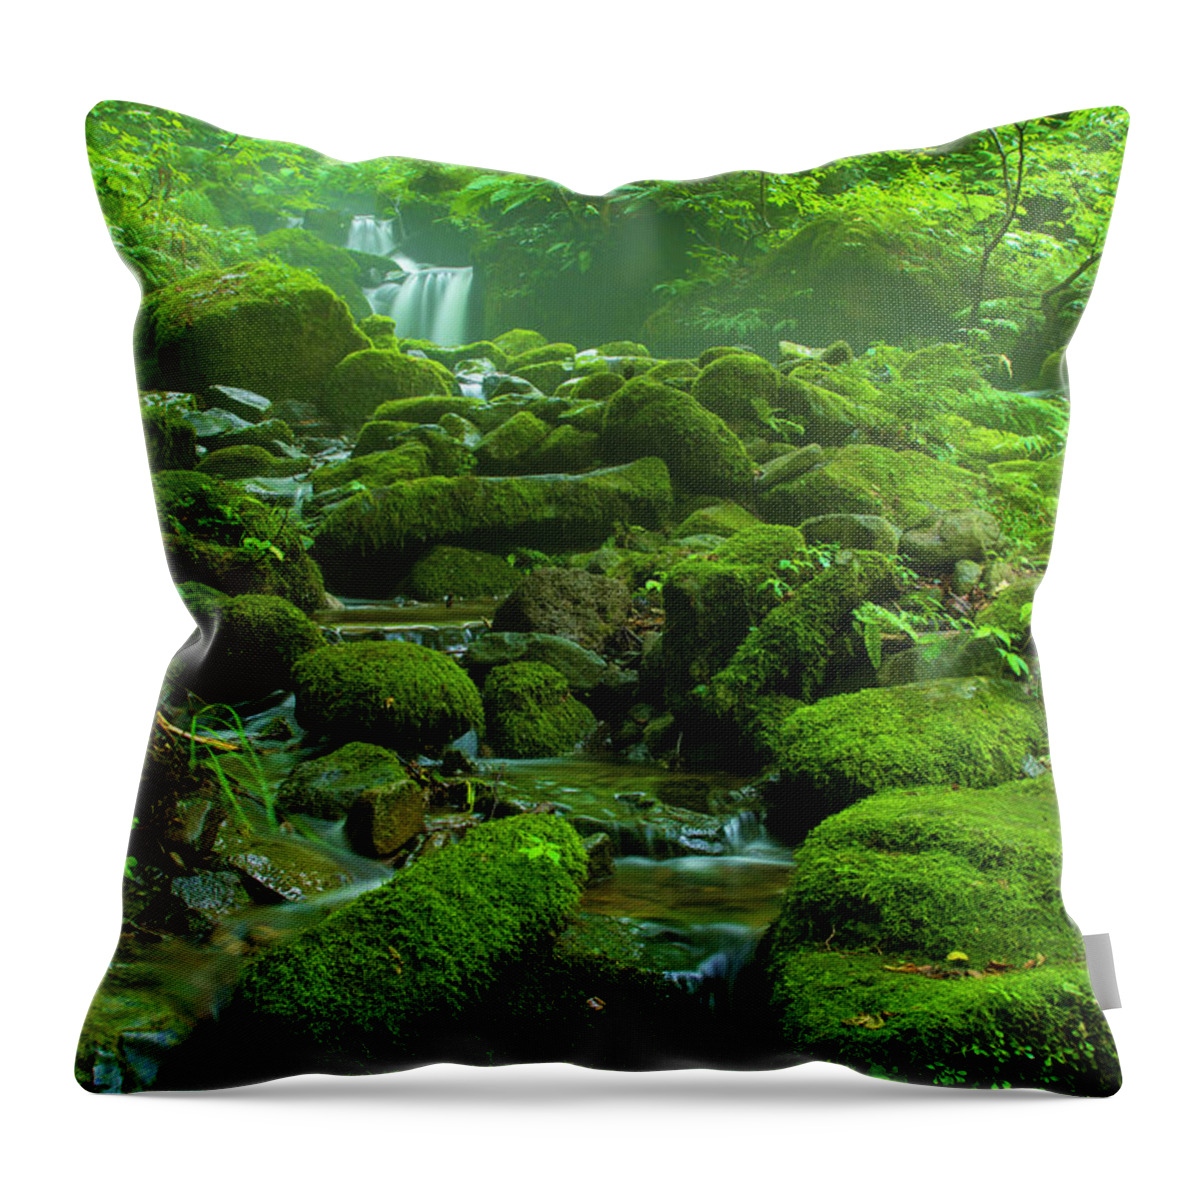 Scenics Throw Pillow featuring the photograph Green Valey by By Rodrigo Herweg